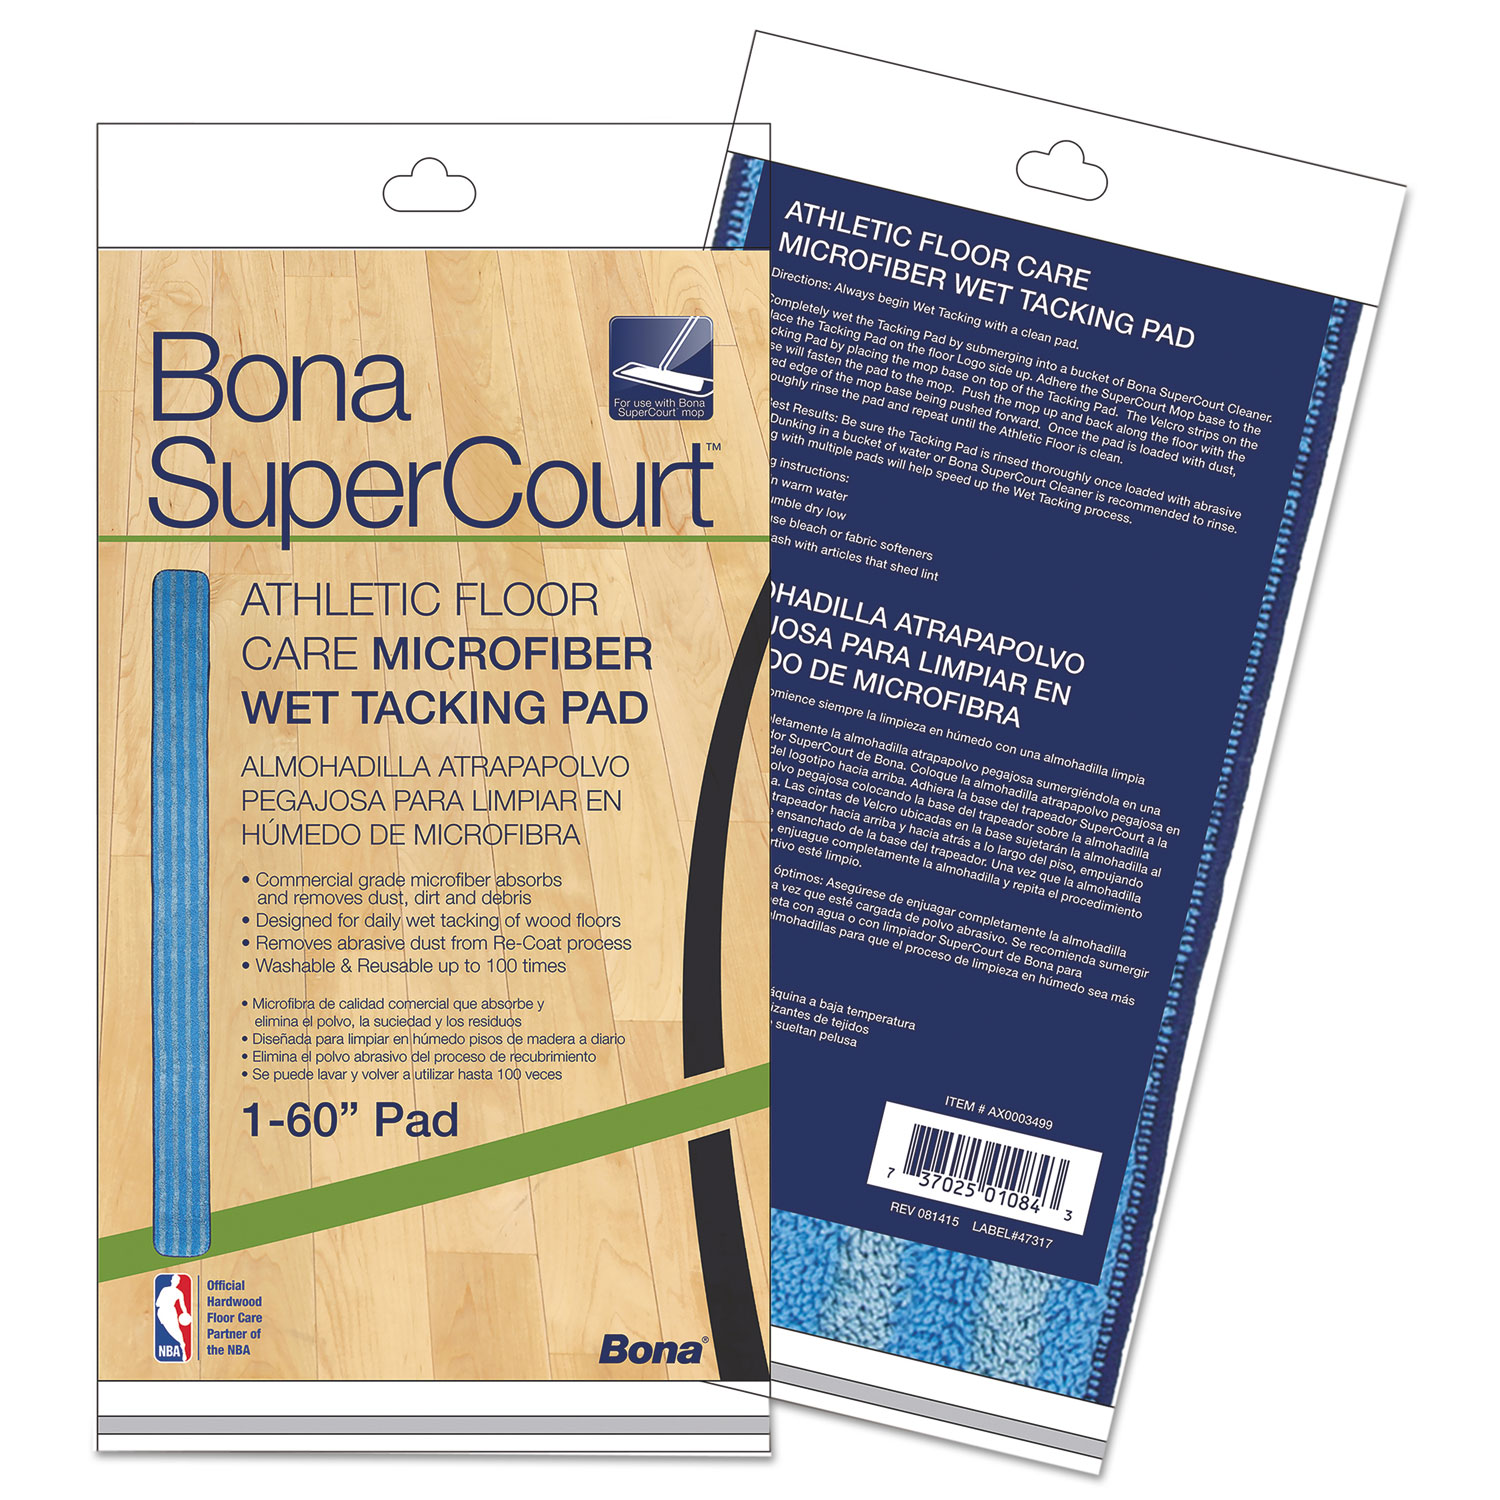  Bona AX0003499 SuperCourt Athletic Floor Care Microfiber Wet Tacking Pad, 60, Light/Dark Blue (BNAAX0003499) 